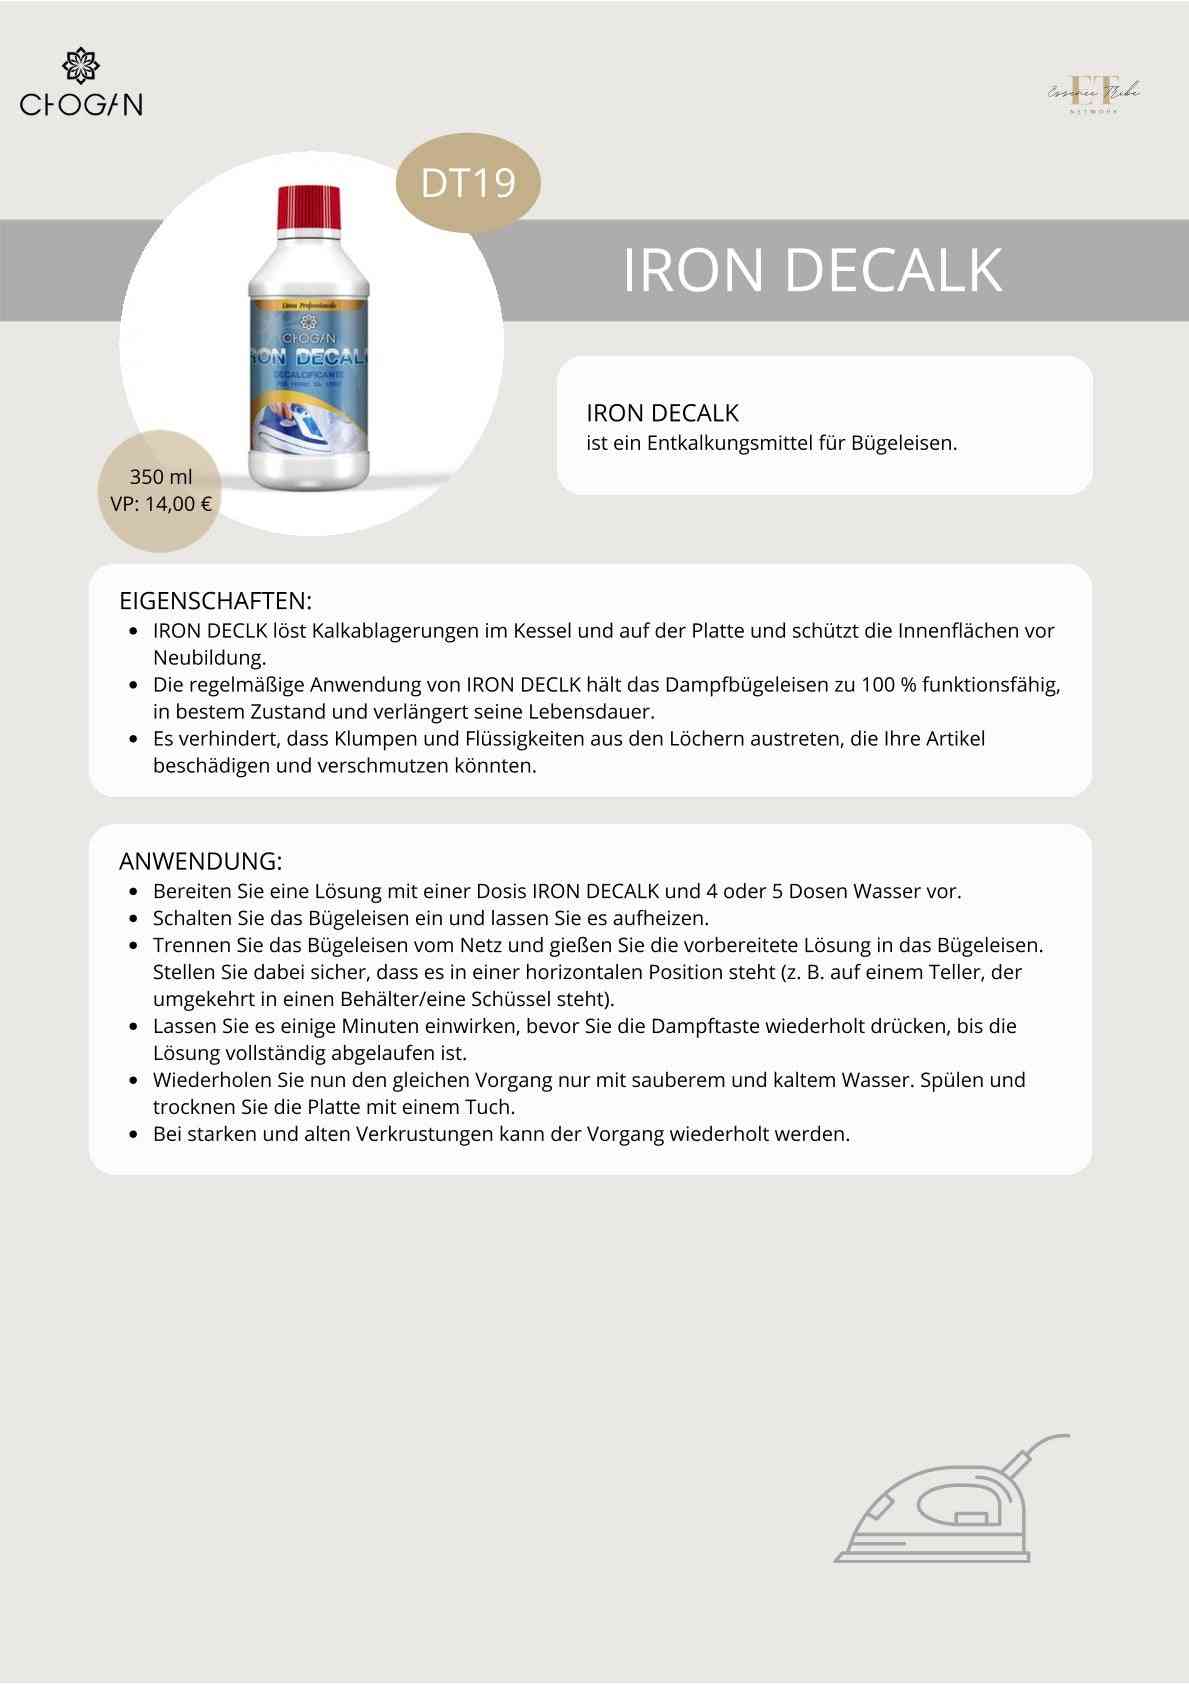 Iron Decalk – Descaler for irons